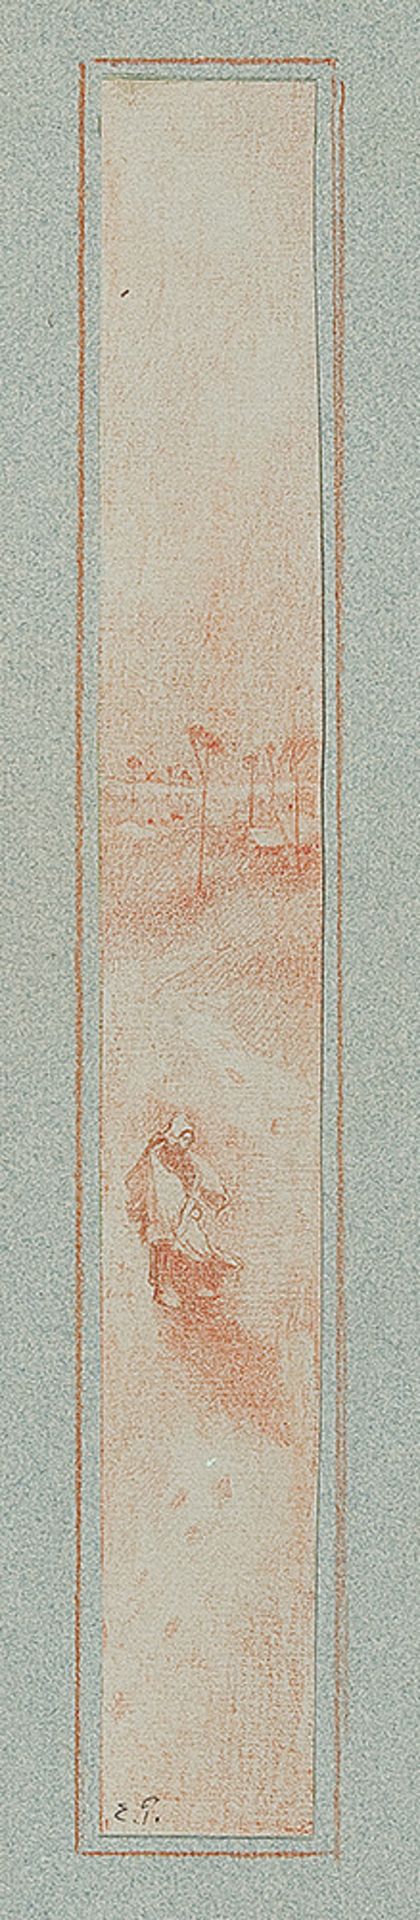 EMILIE MEDIZ-PELIKAN (Vöcklabruck 1861 - 1908 Dresden) - Bild 3 aus 3